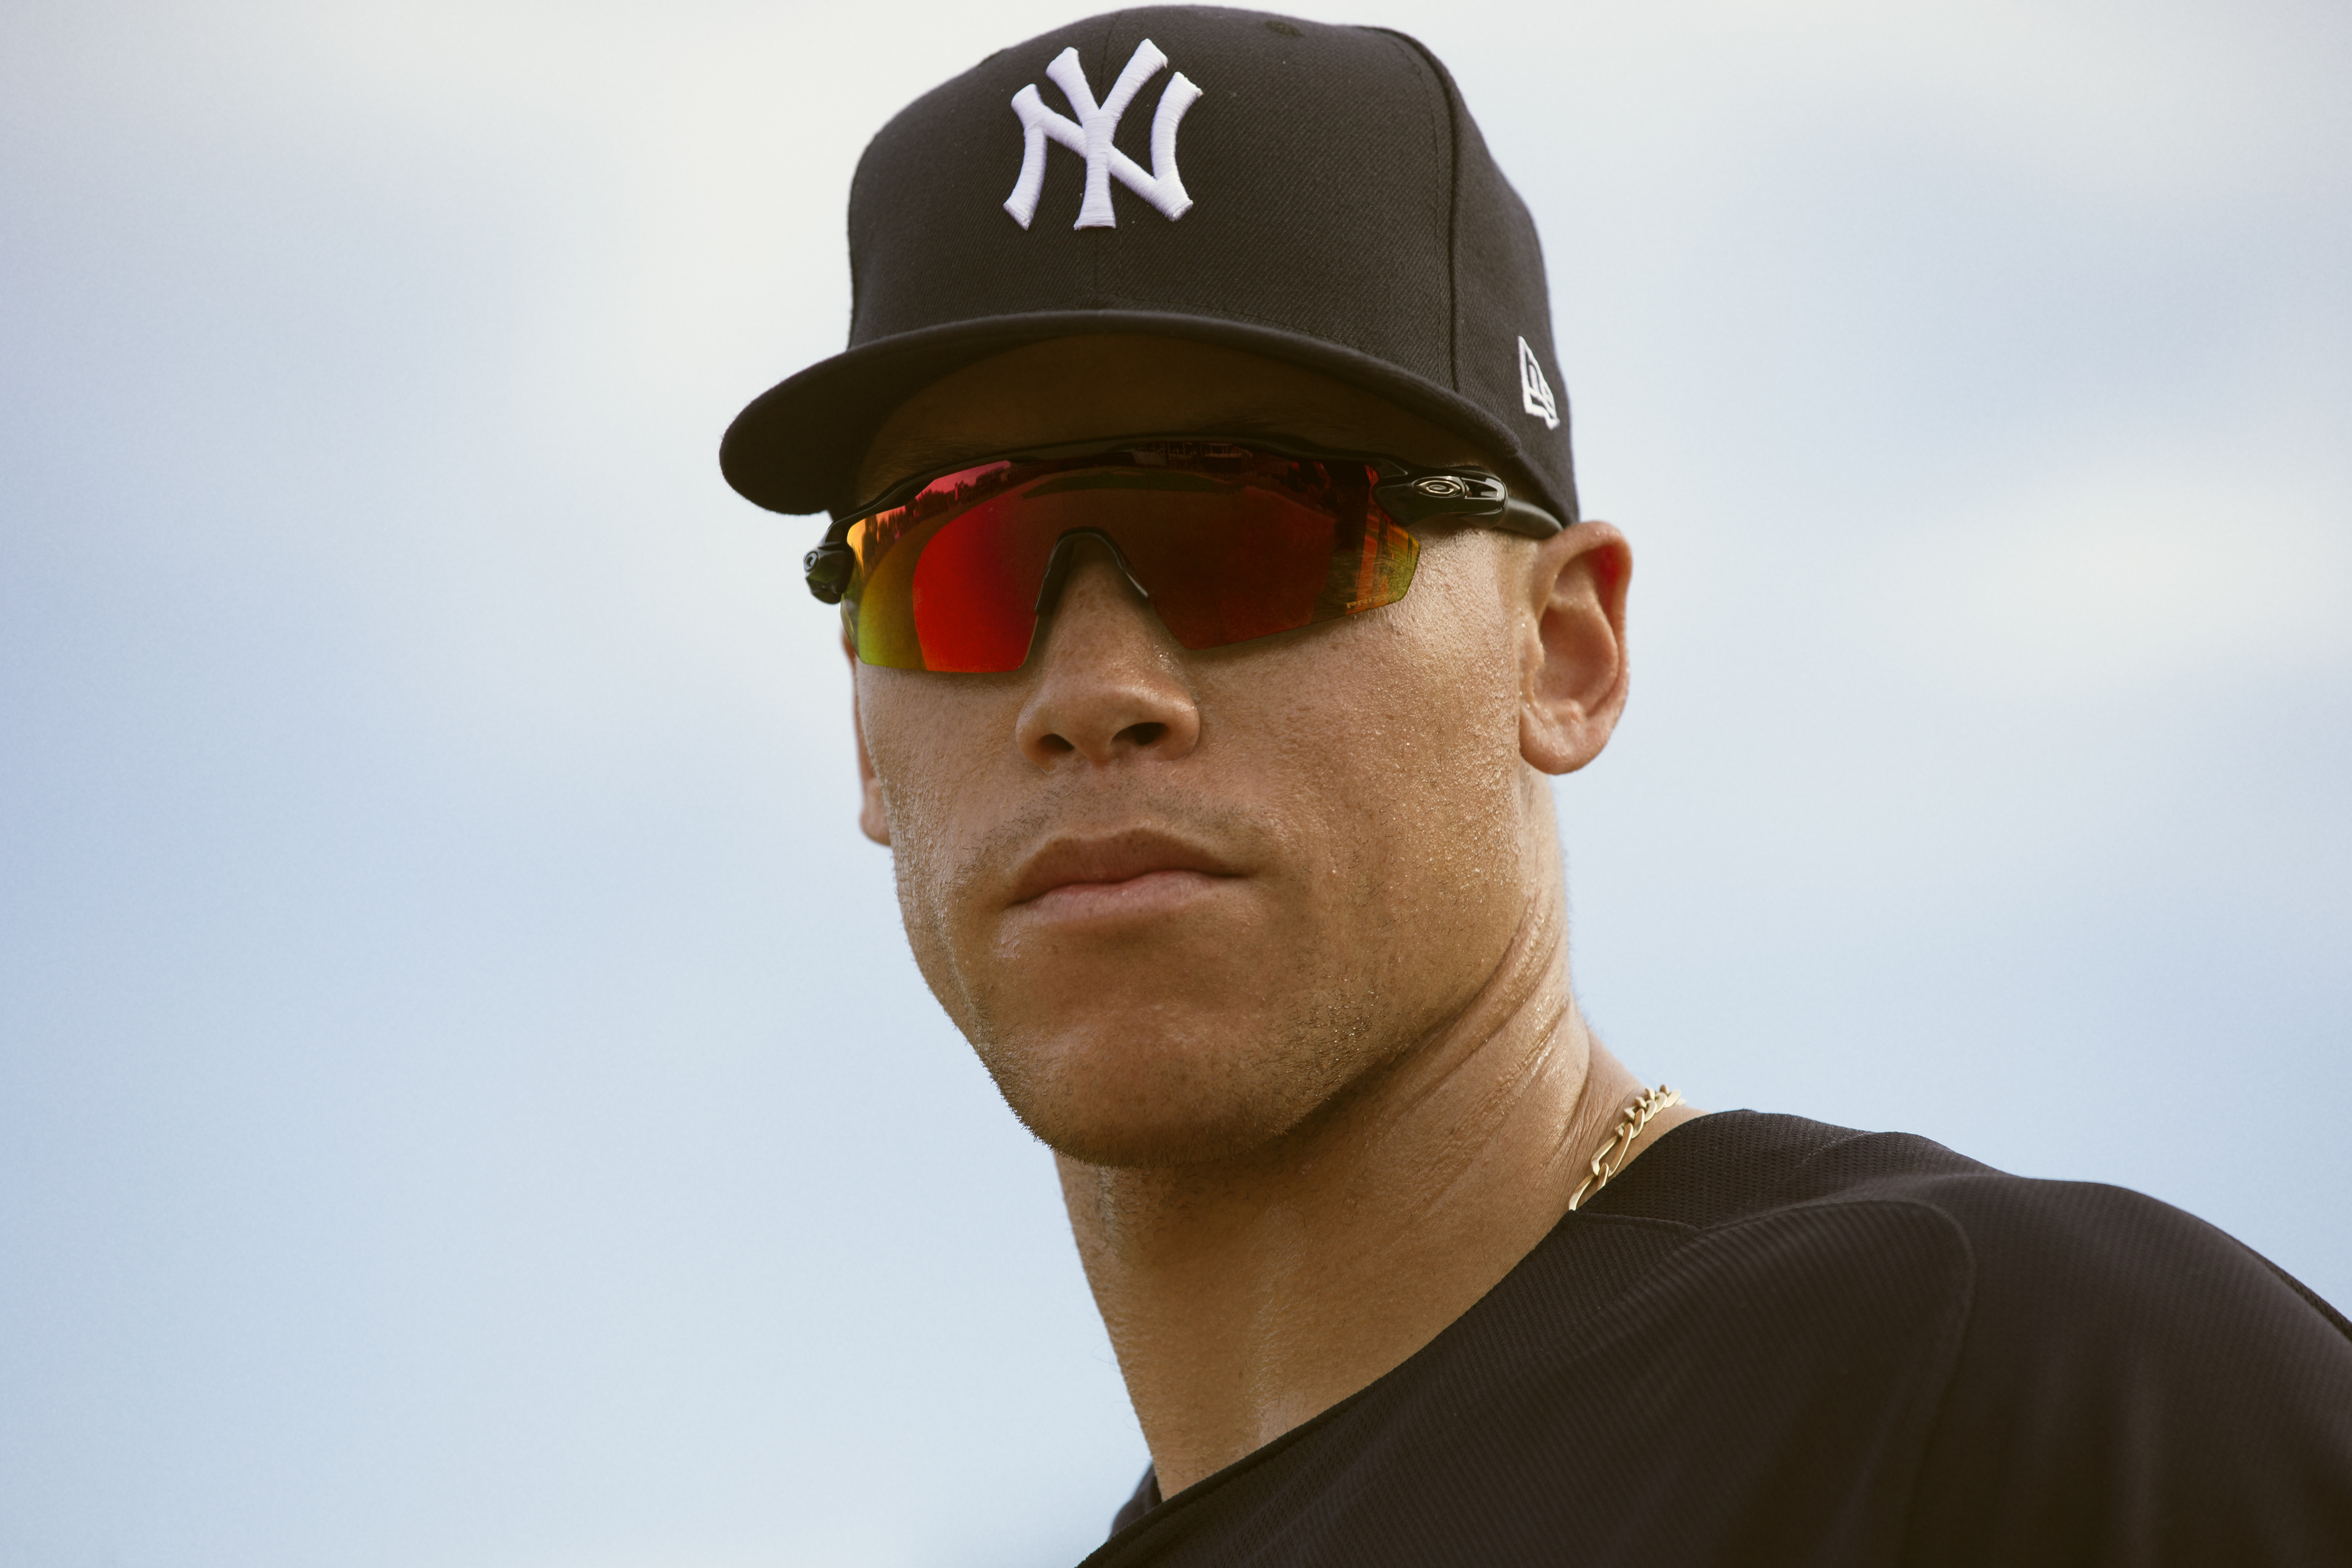 Oakley Baseball Sunglasses Buyer's | SportRx.com - Transforming your visual